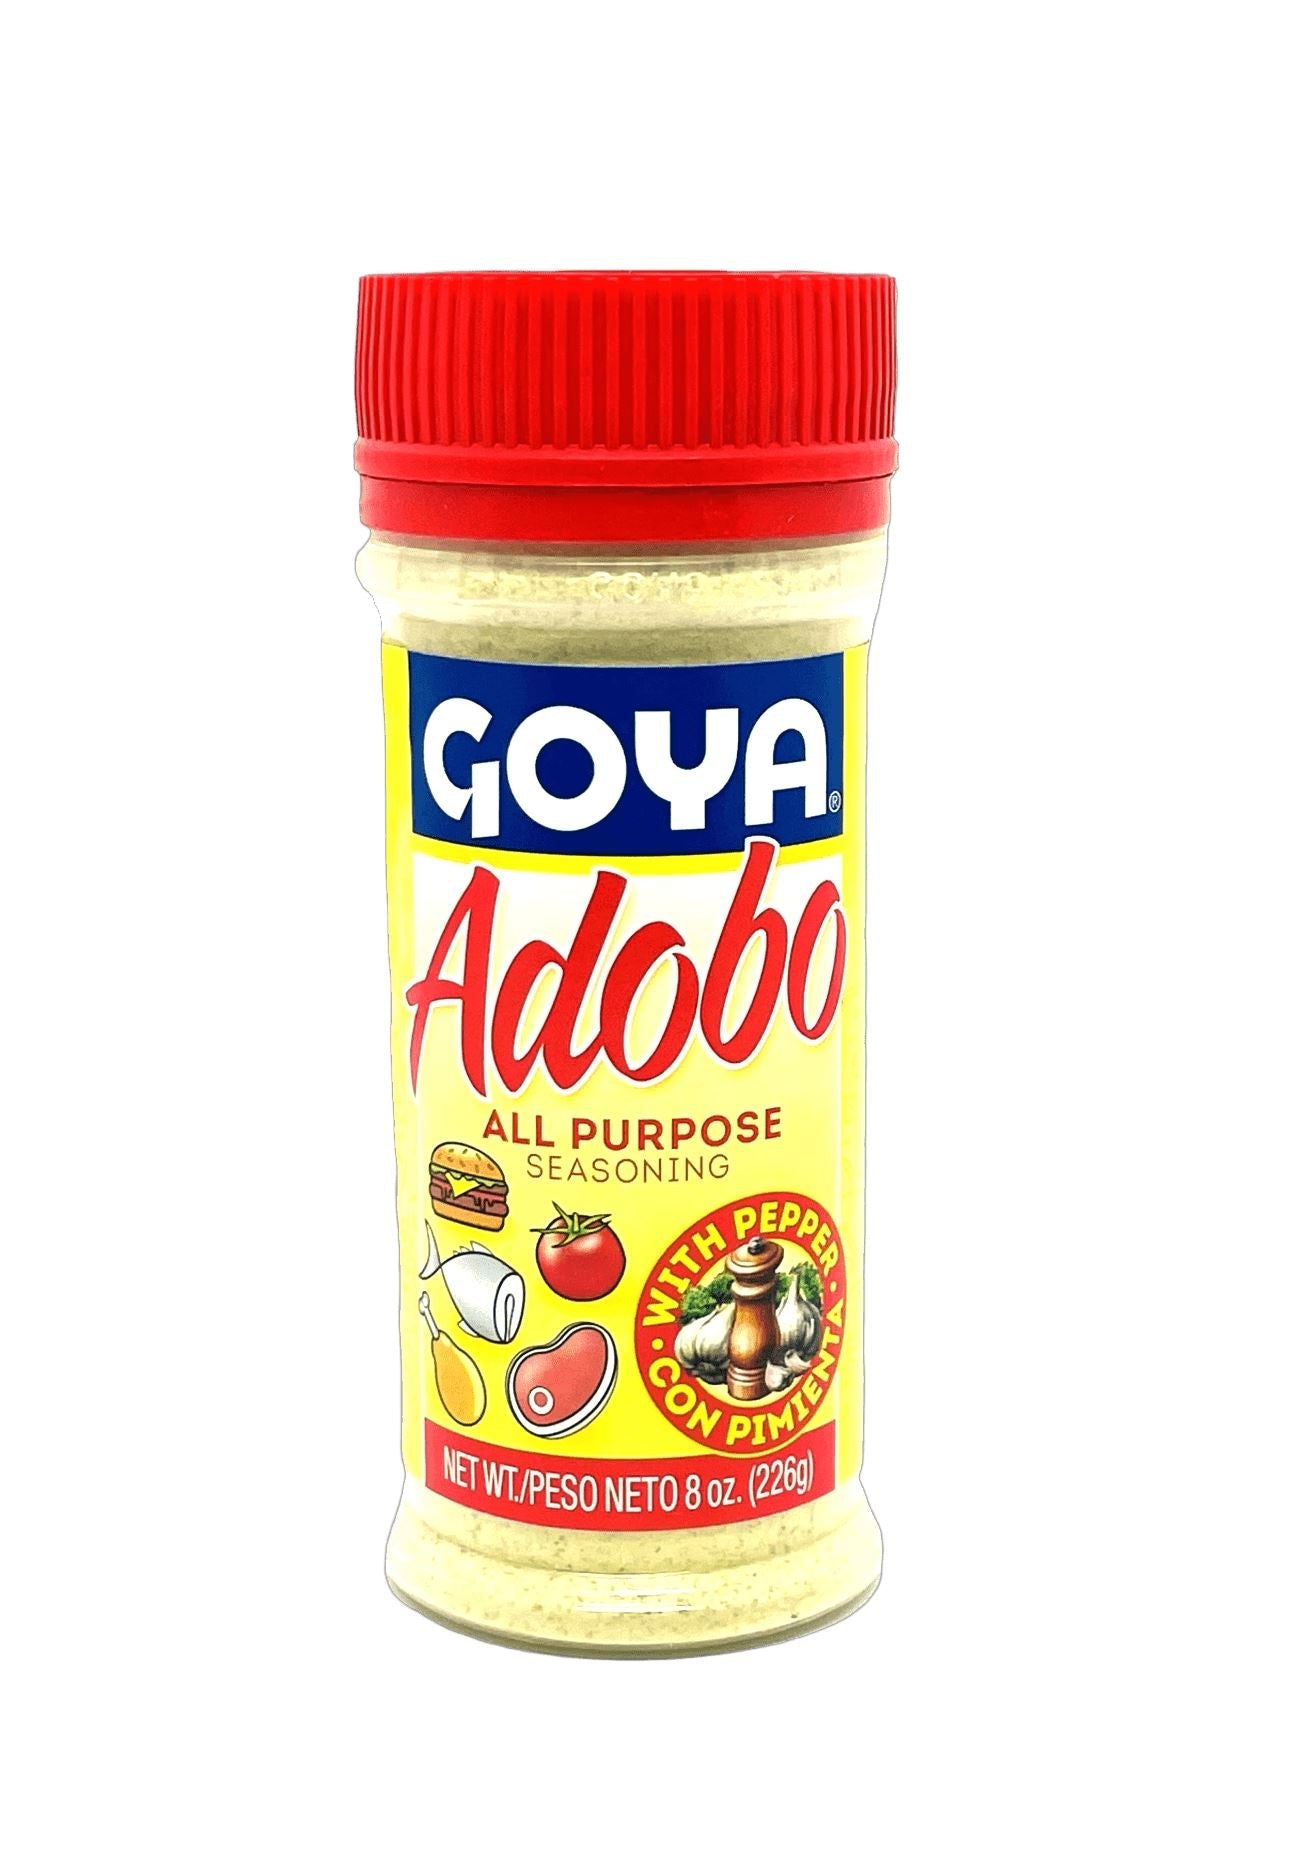 Goya All Purpose Seasoning With Pepper (Adobo) 226g Seasoning Goya 